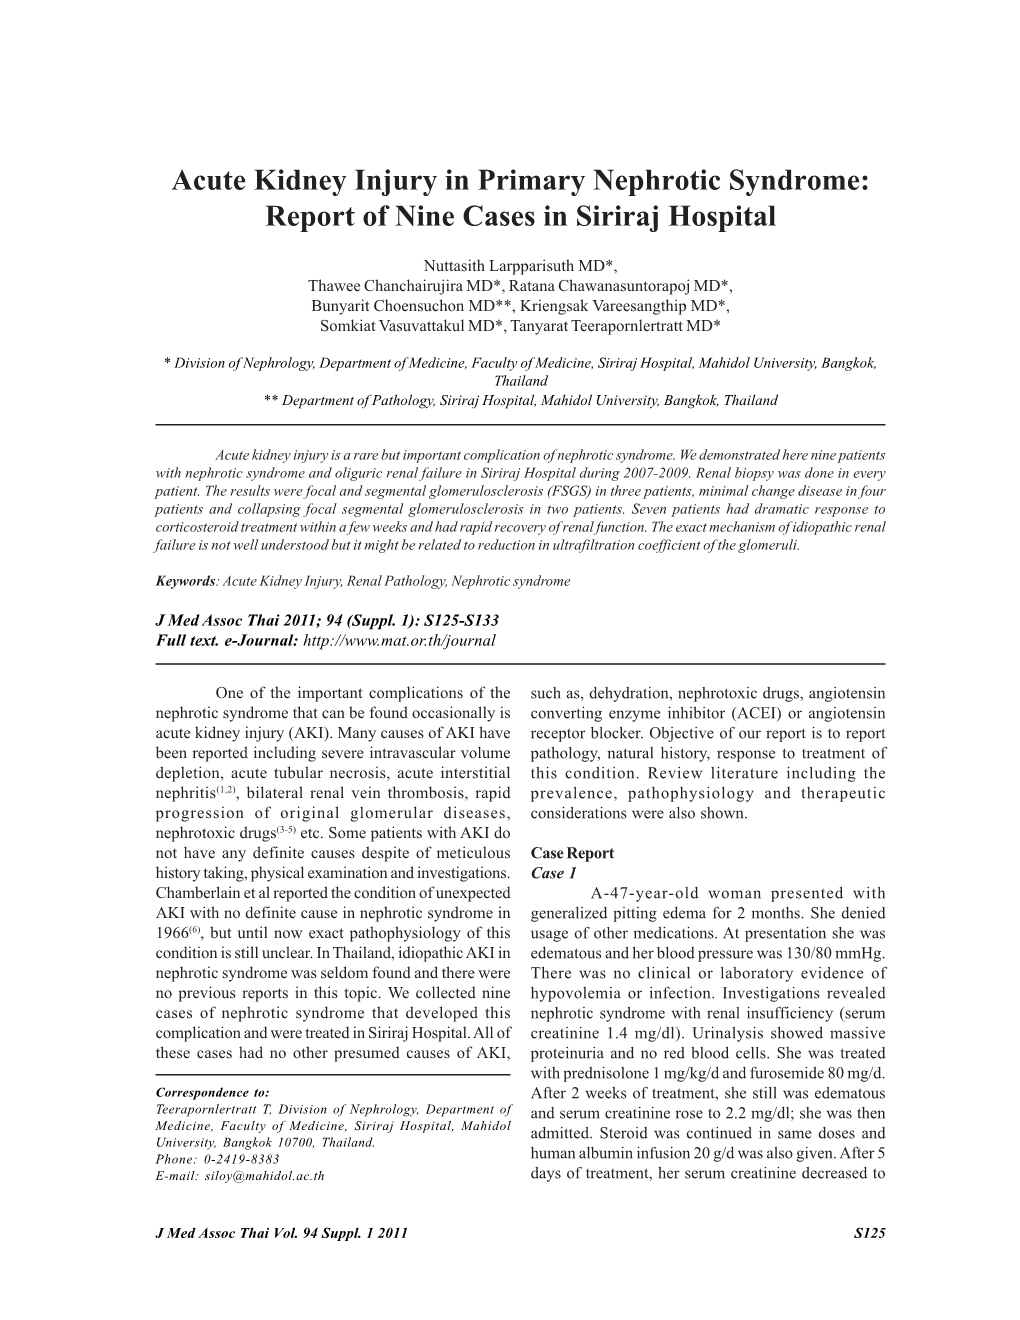 Acute Kidney Injury in Primary Nephrotic Syndrome: Report of Nine Cases in Siriraj Hospital